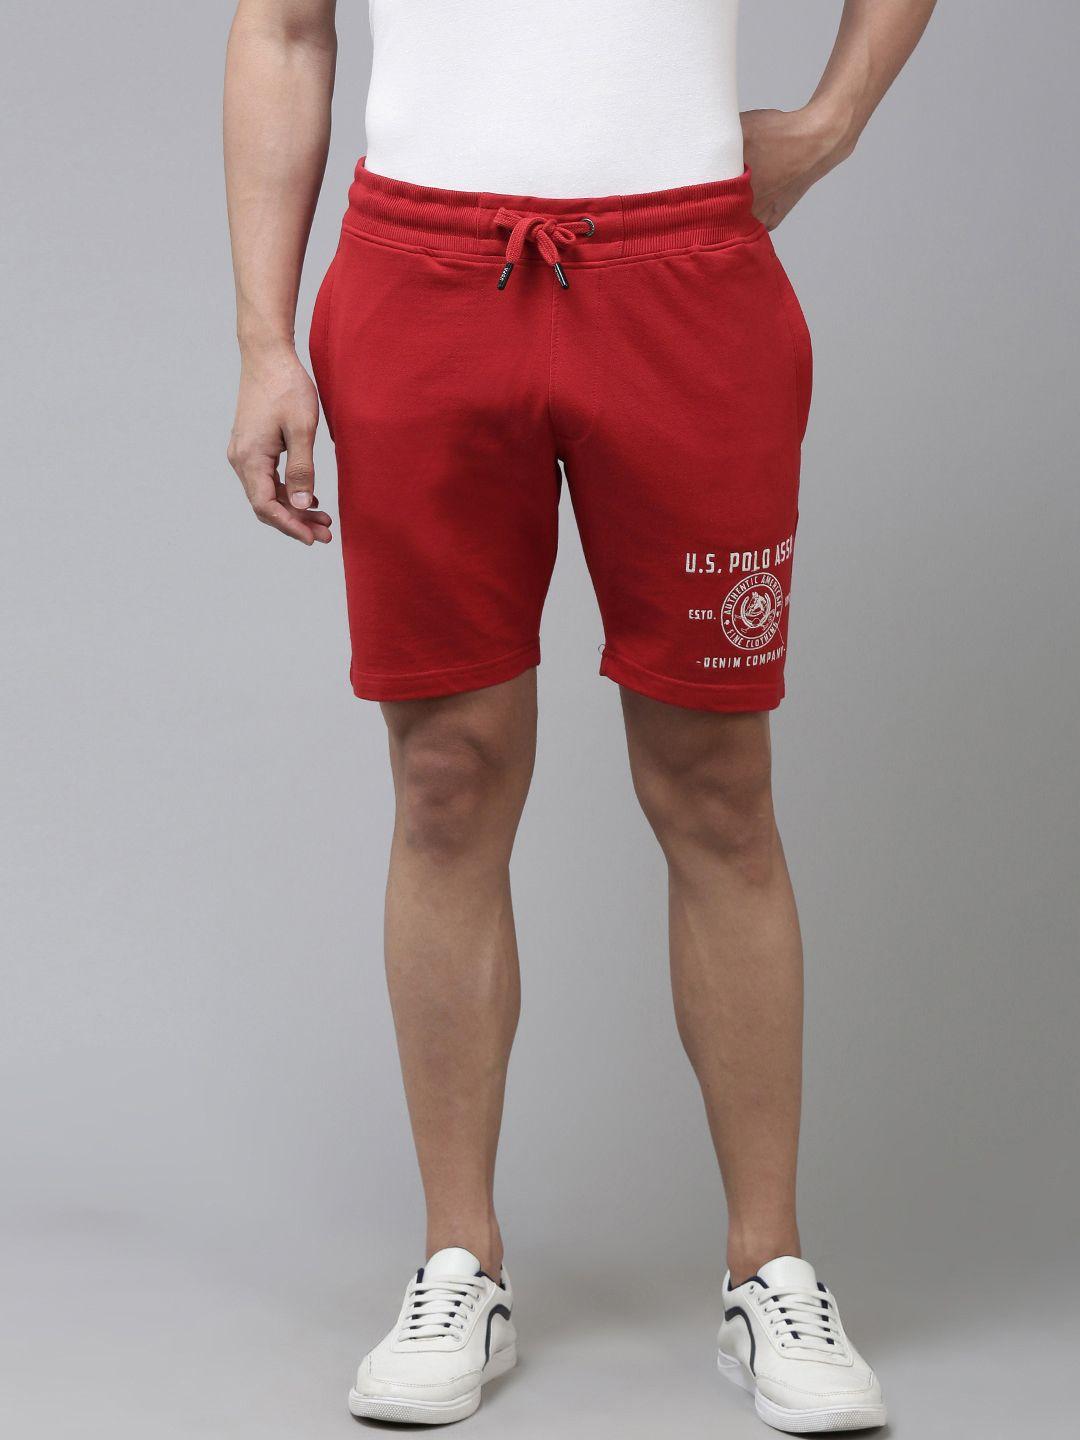 u.s. polo assn. denim co. men red typography printed regular shorts